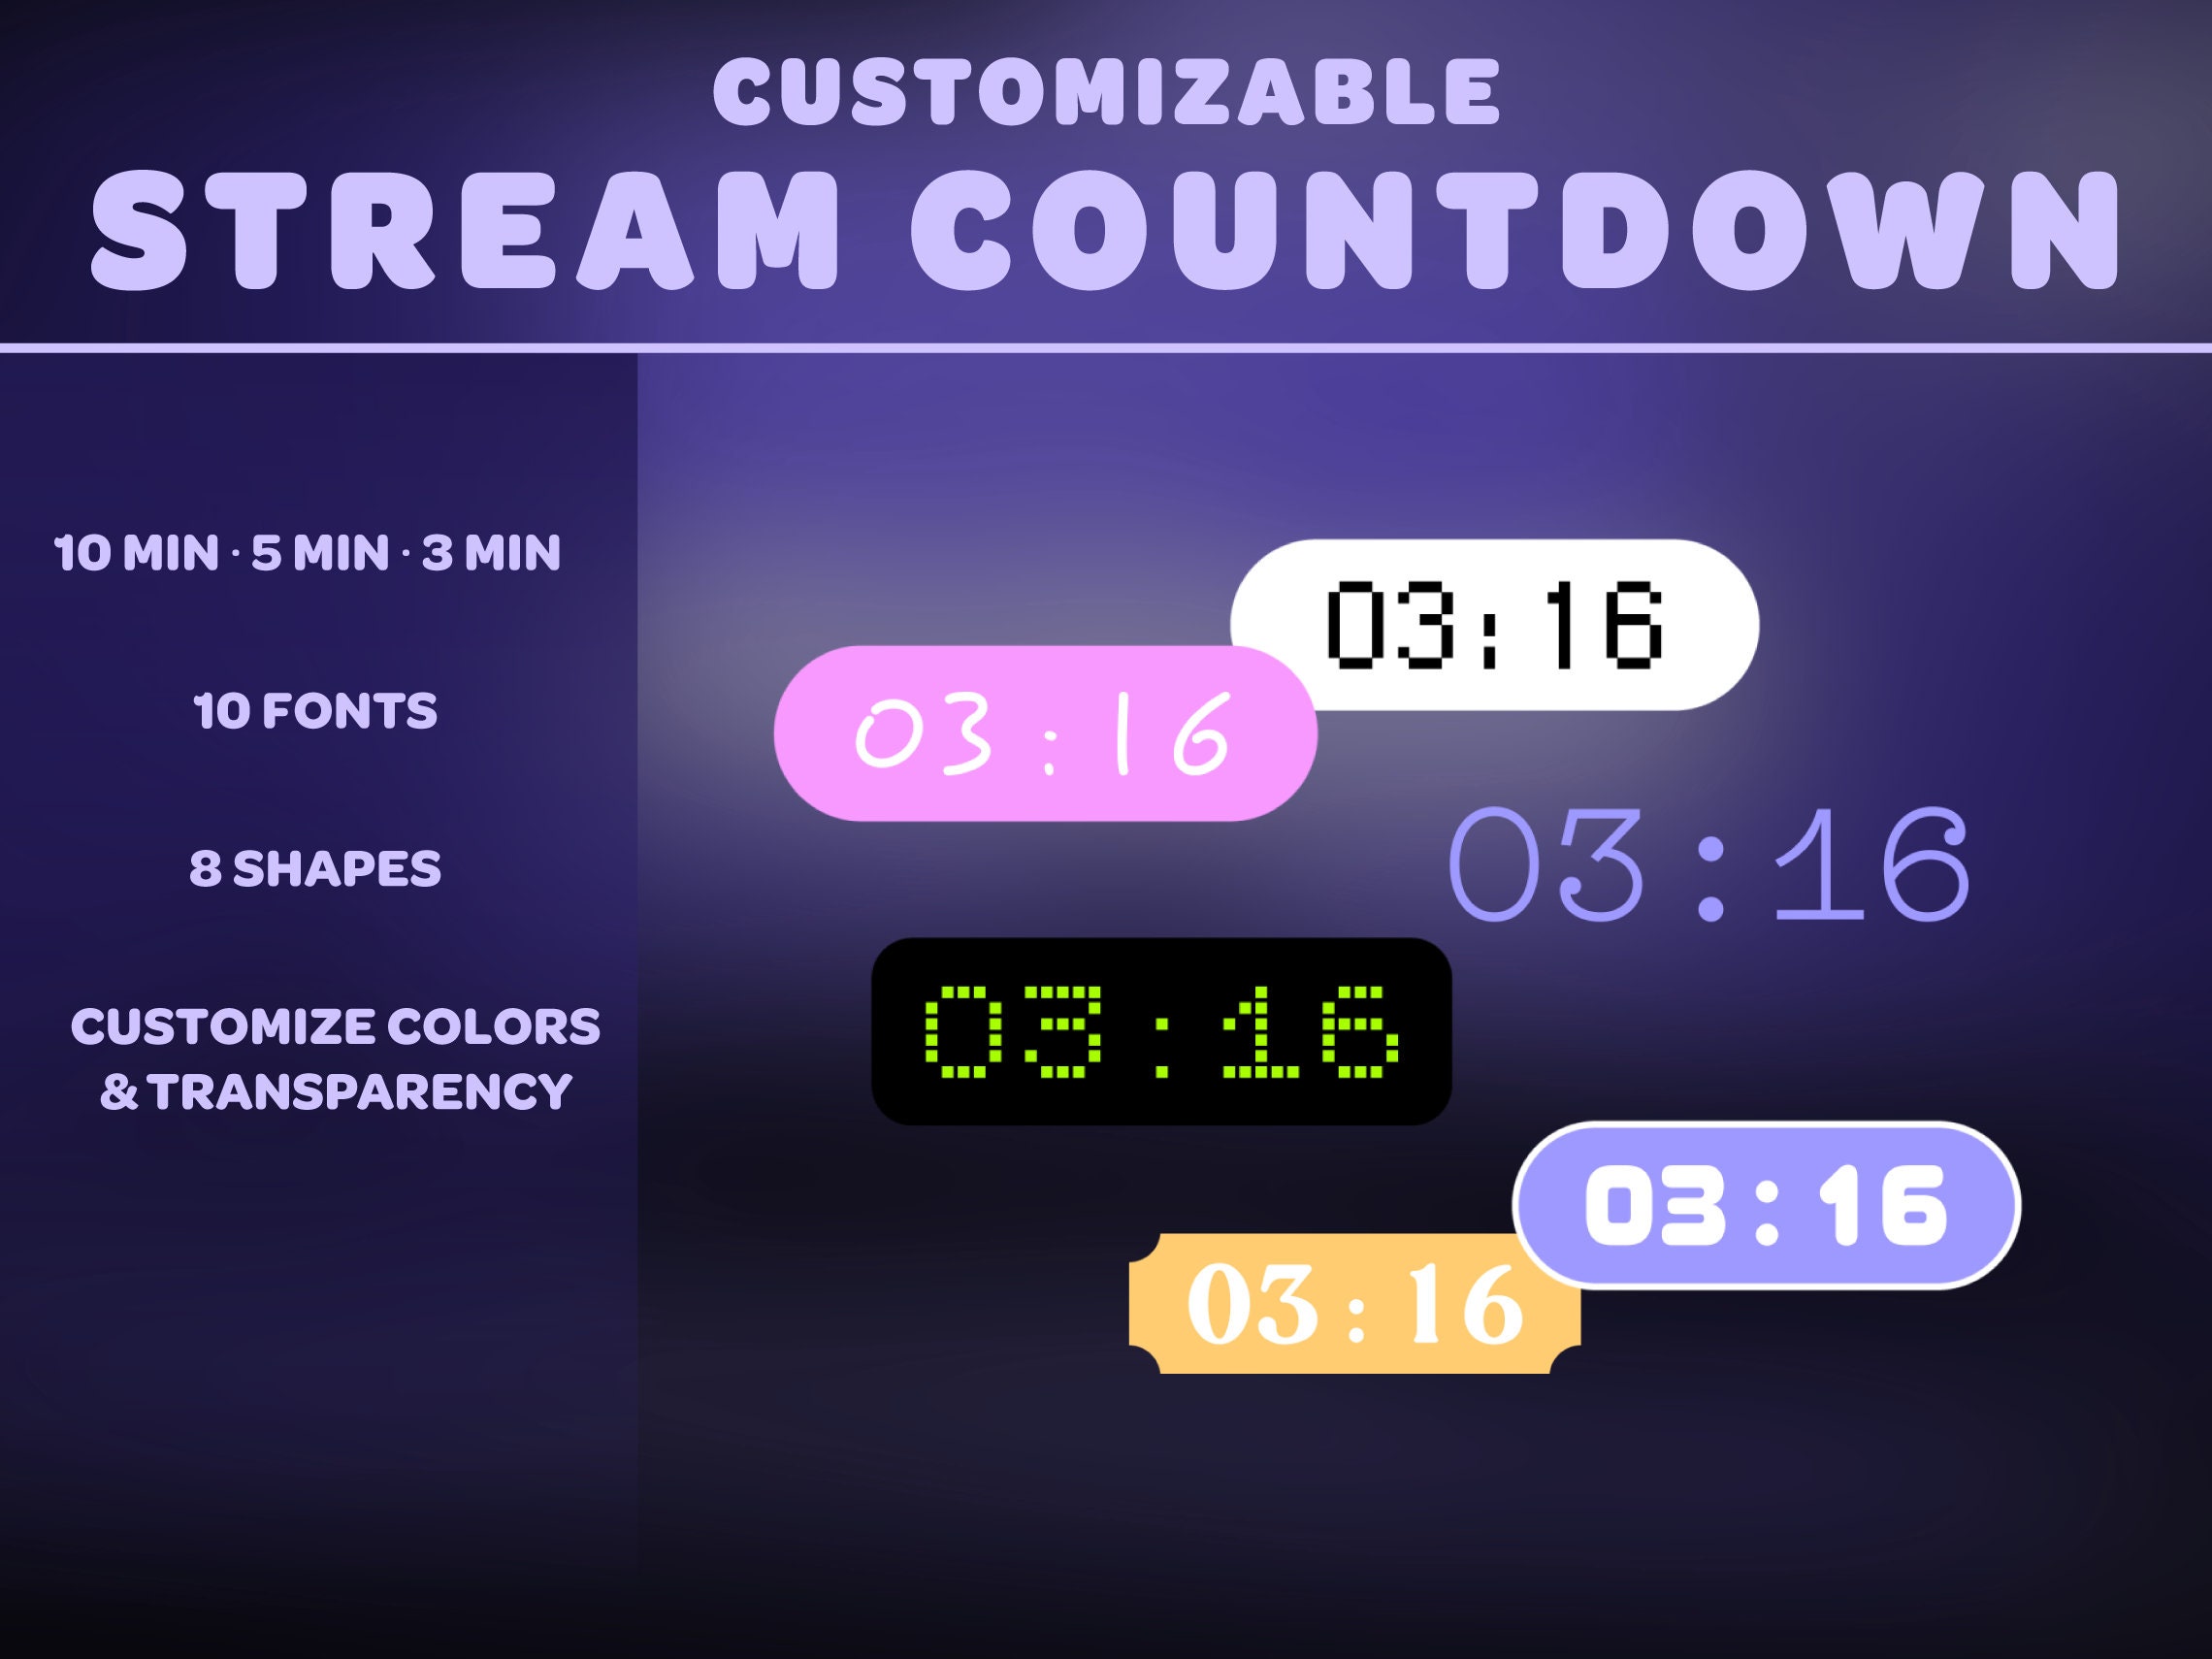 Stream Countdown Customizable 3 Min 5 Min 10 Min